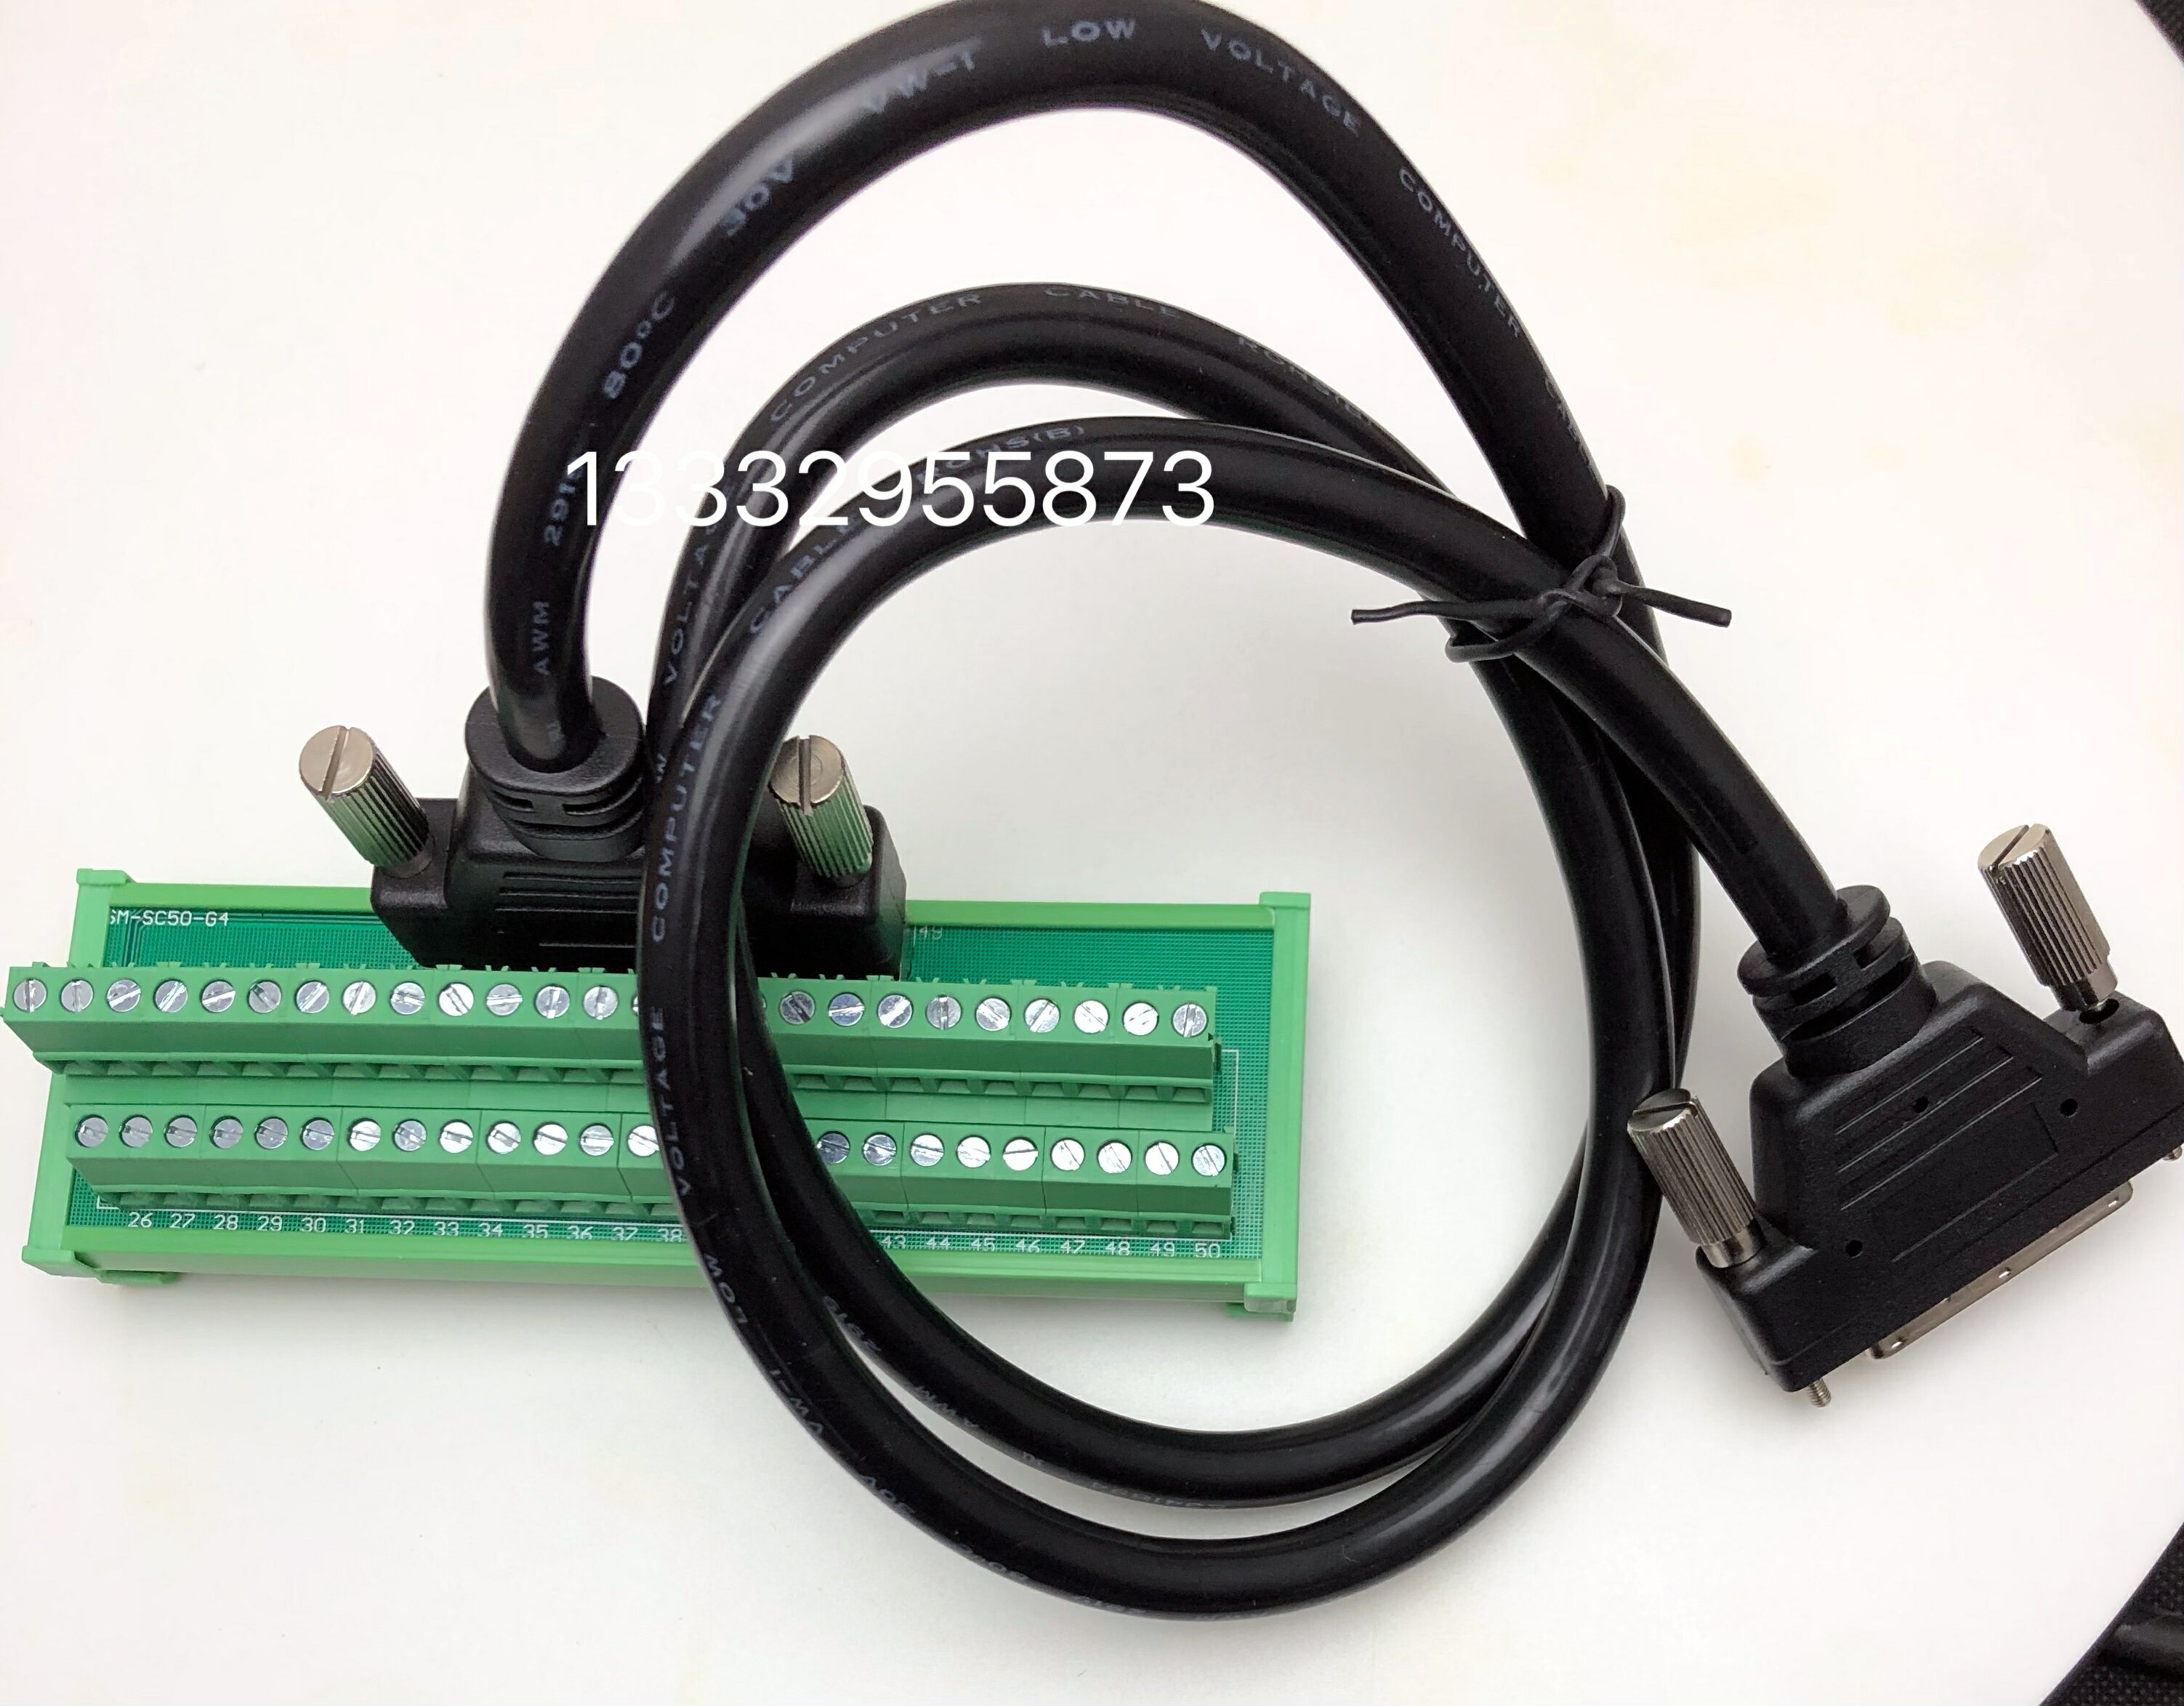 V90伺服驅動器X8接口端子臺含電纜 SCSI50 SM-SC50-G4中繼端子臺